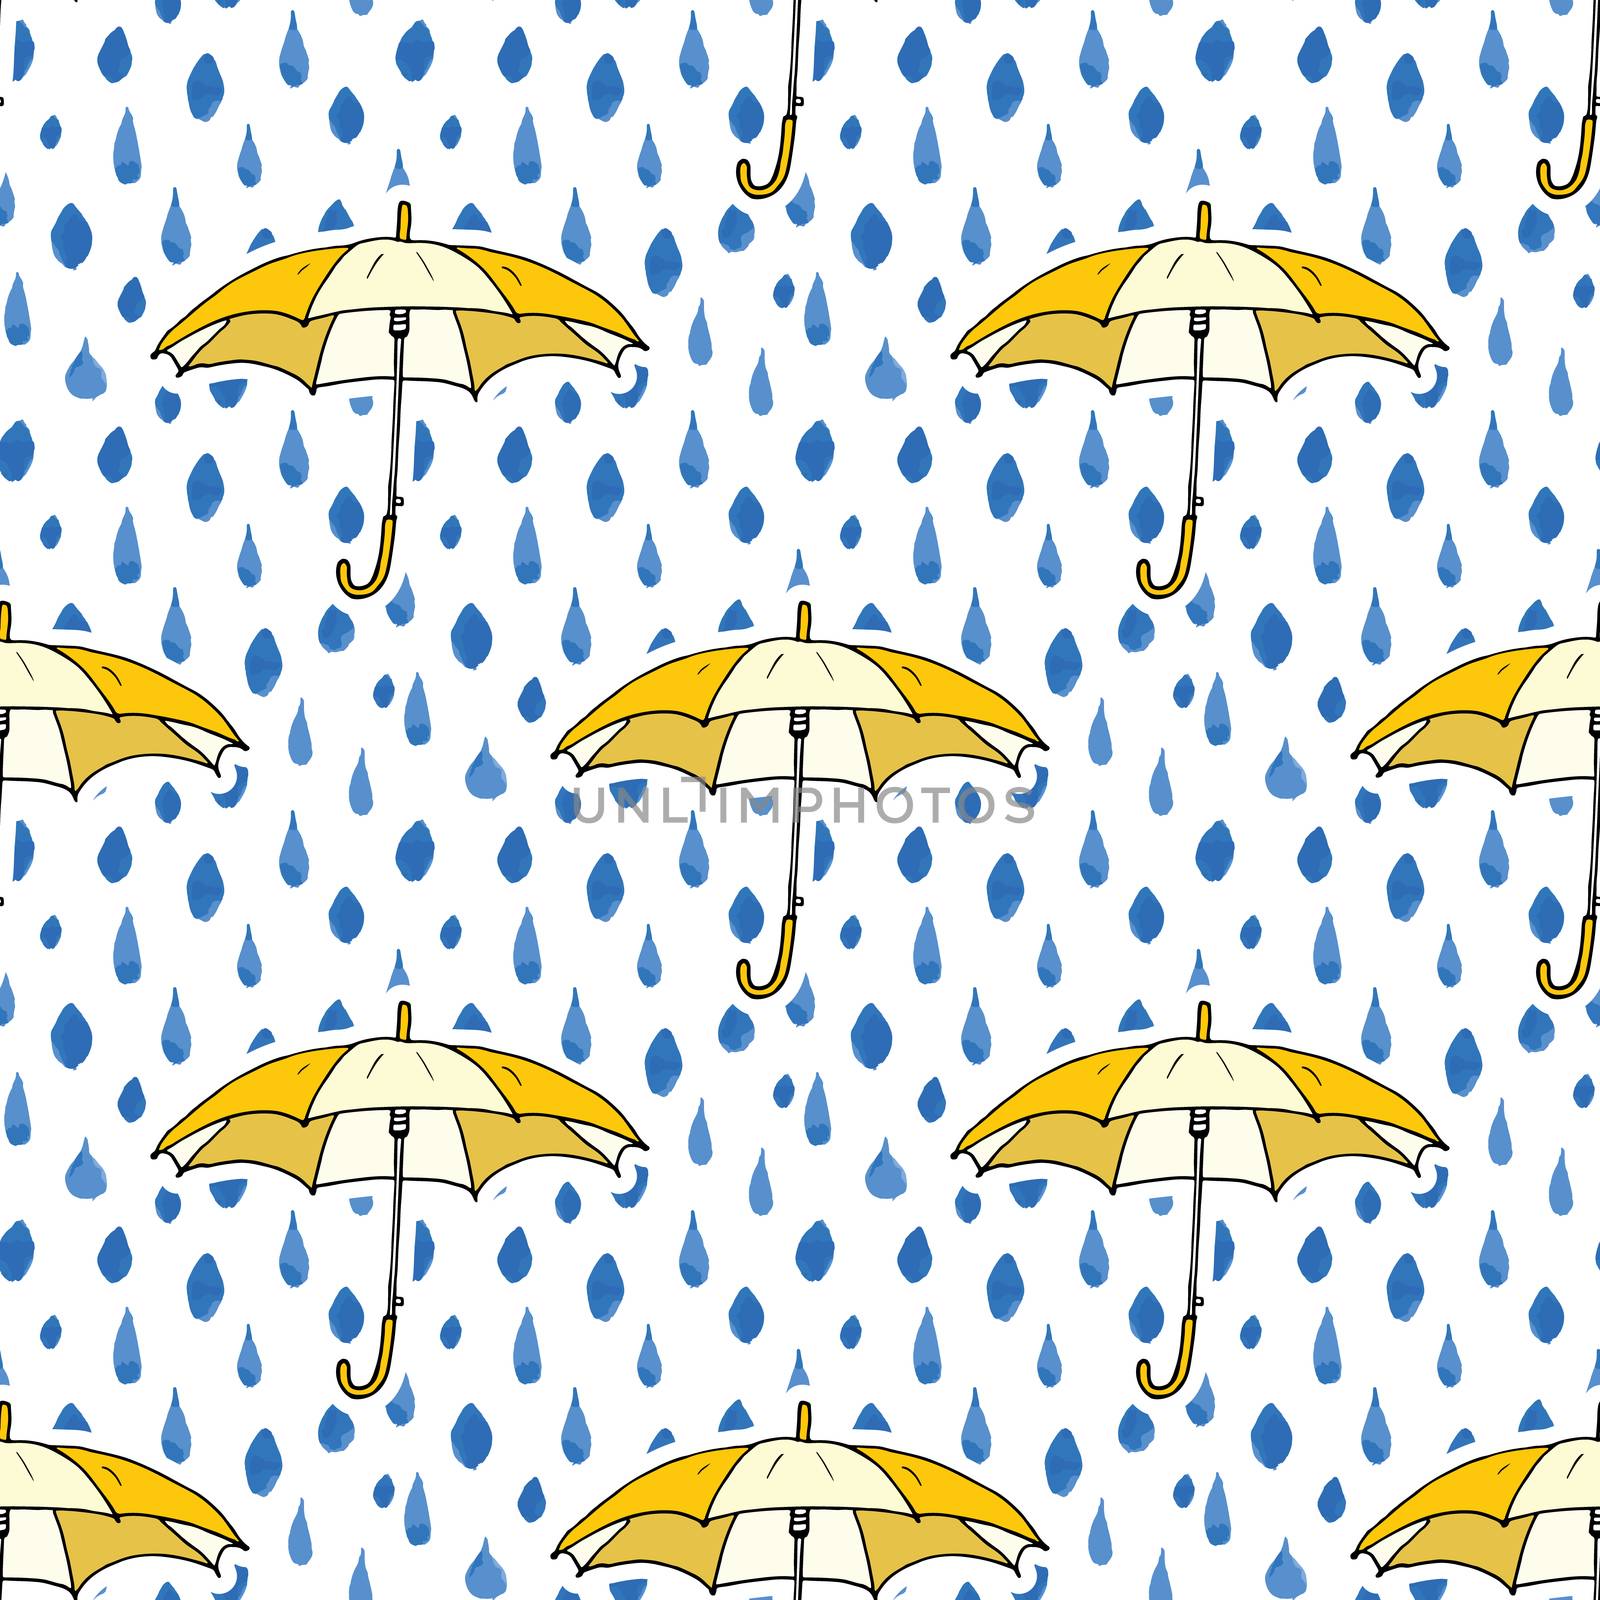 Rain drops and umbrella seamless pattern. Hand drawn vector illustration